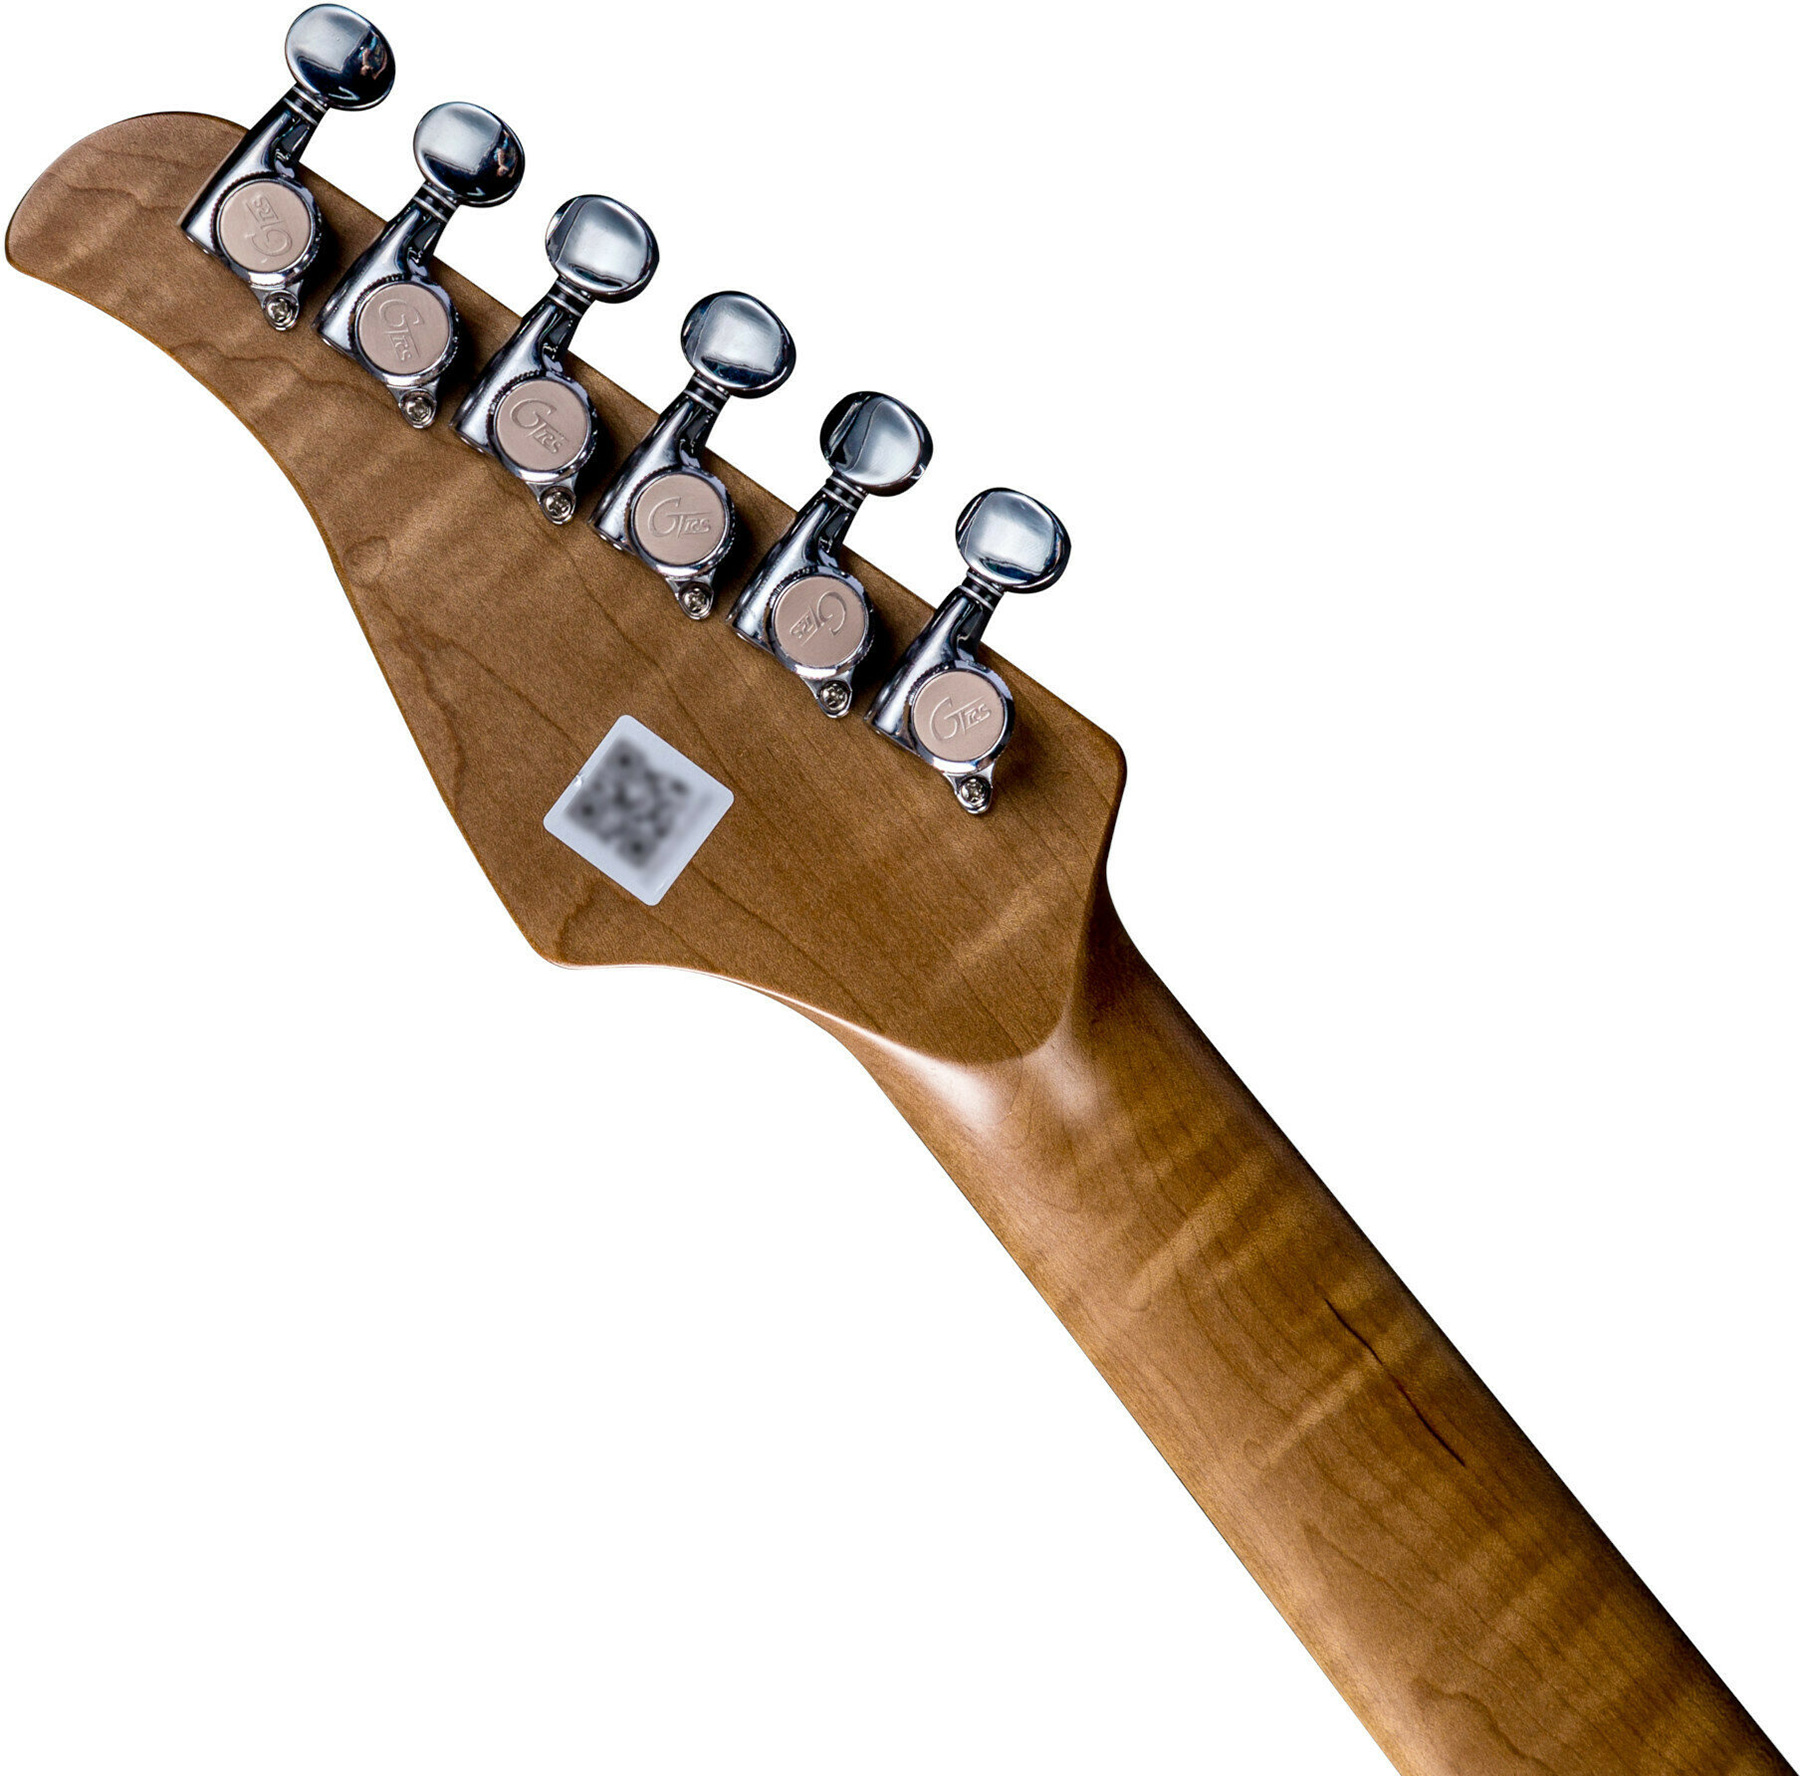 Mooer Gtrs P800 Pro Intelligent Guitar Hss Trem Rw - Olympic White - Modeling guitar - Variation 5